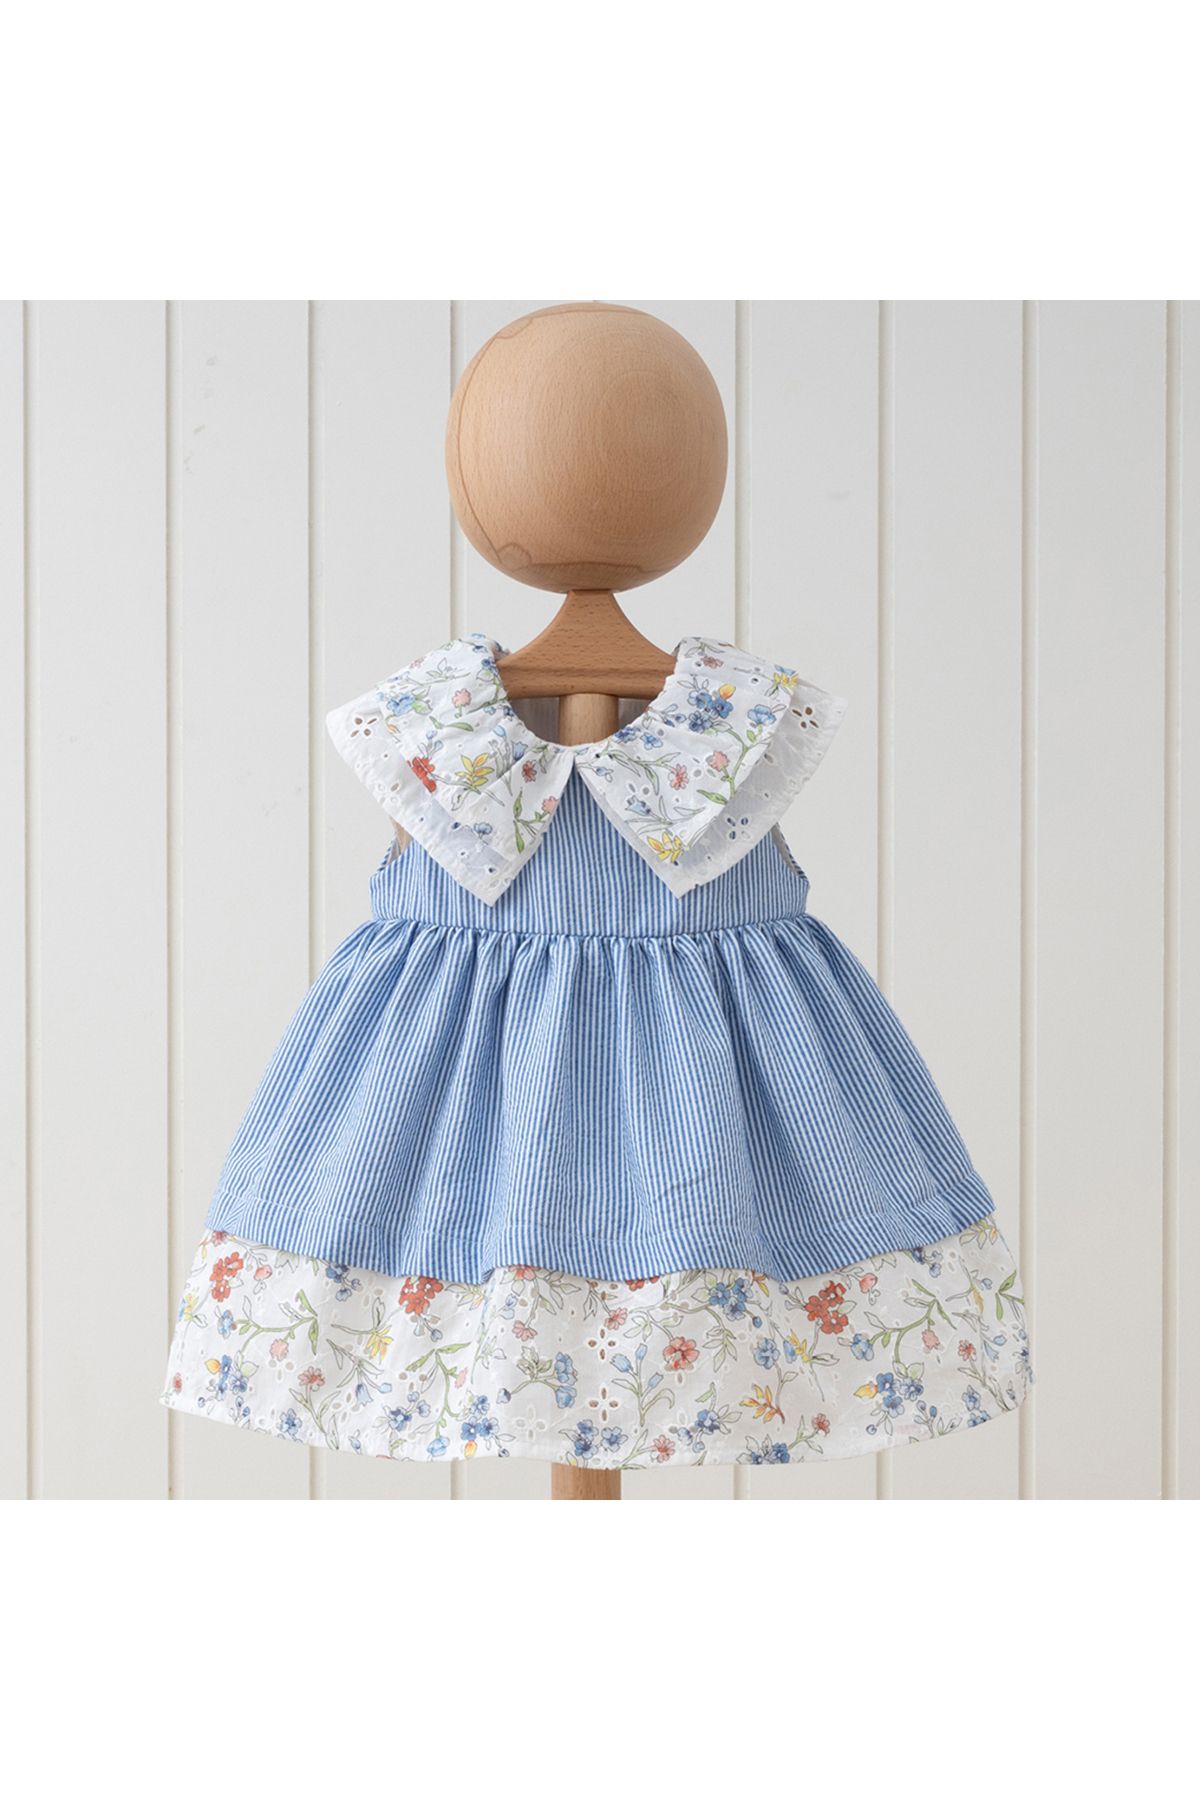 miomini Blossom Stripes %100 Pamuk Çizgili ve Çiçekli Kız Bebek Elbisesi